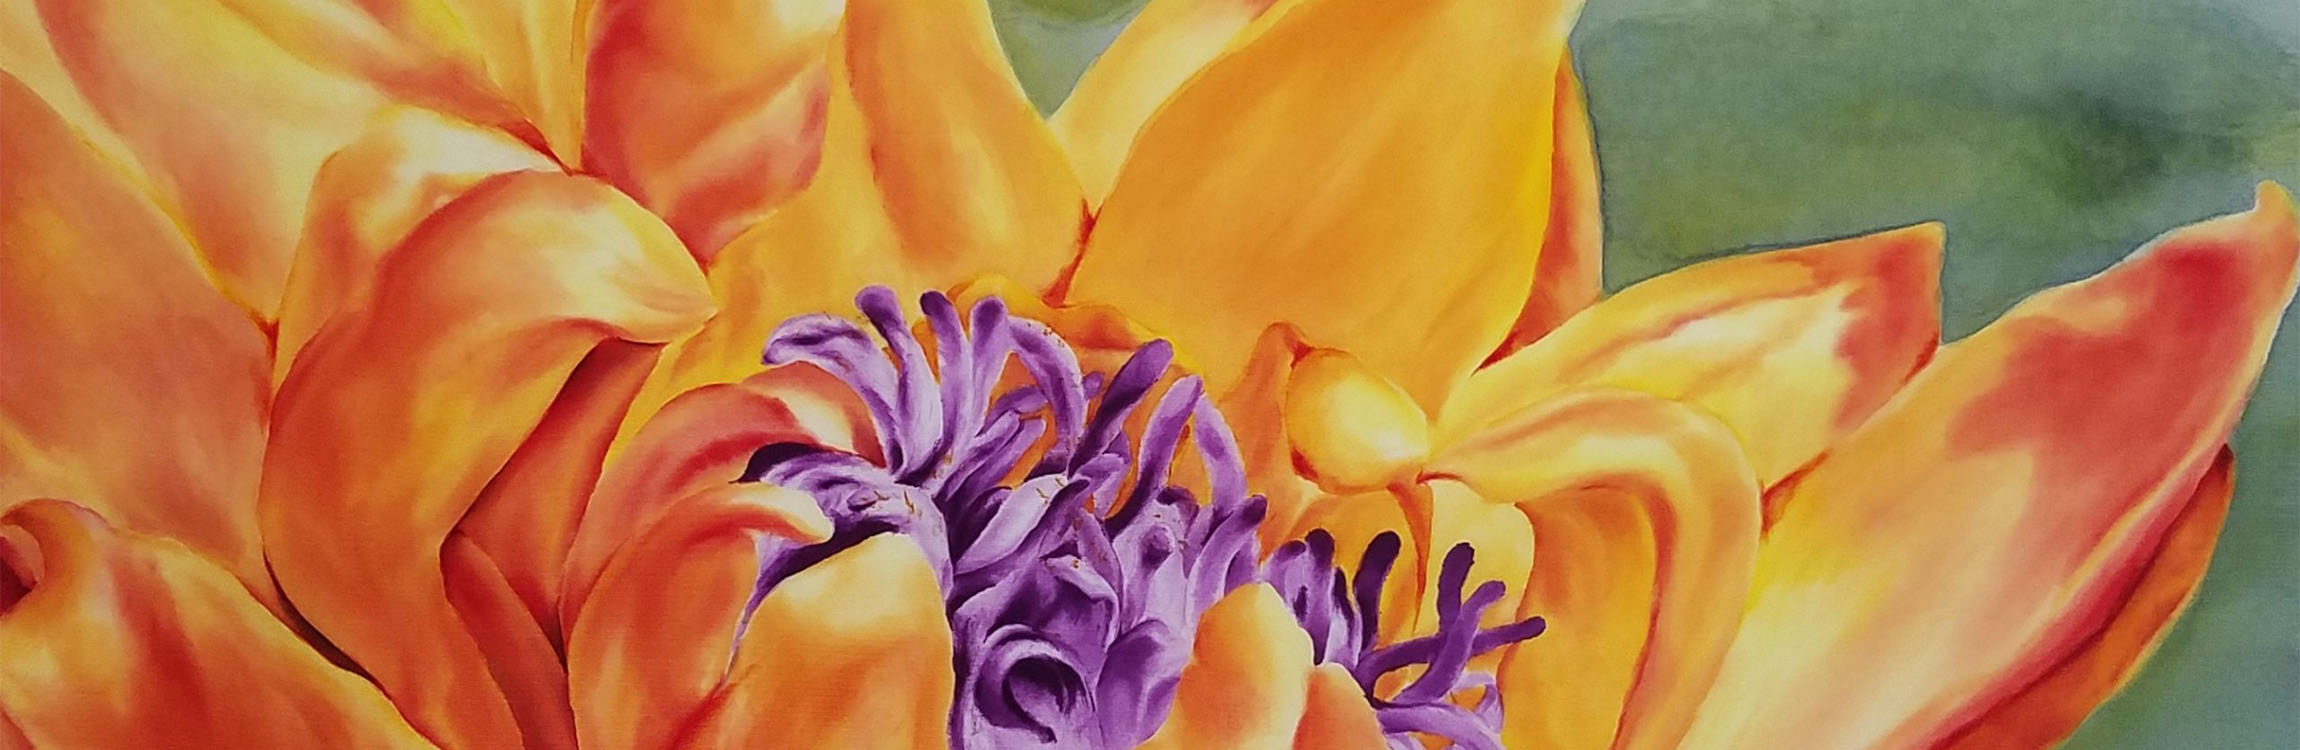 Lotus-Flower